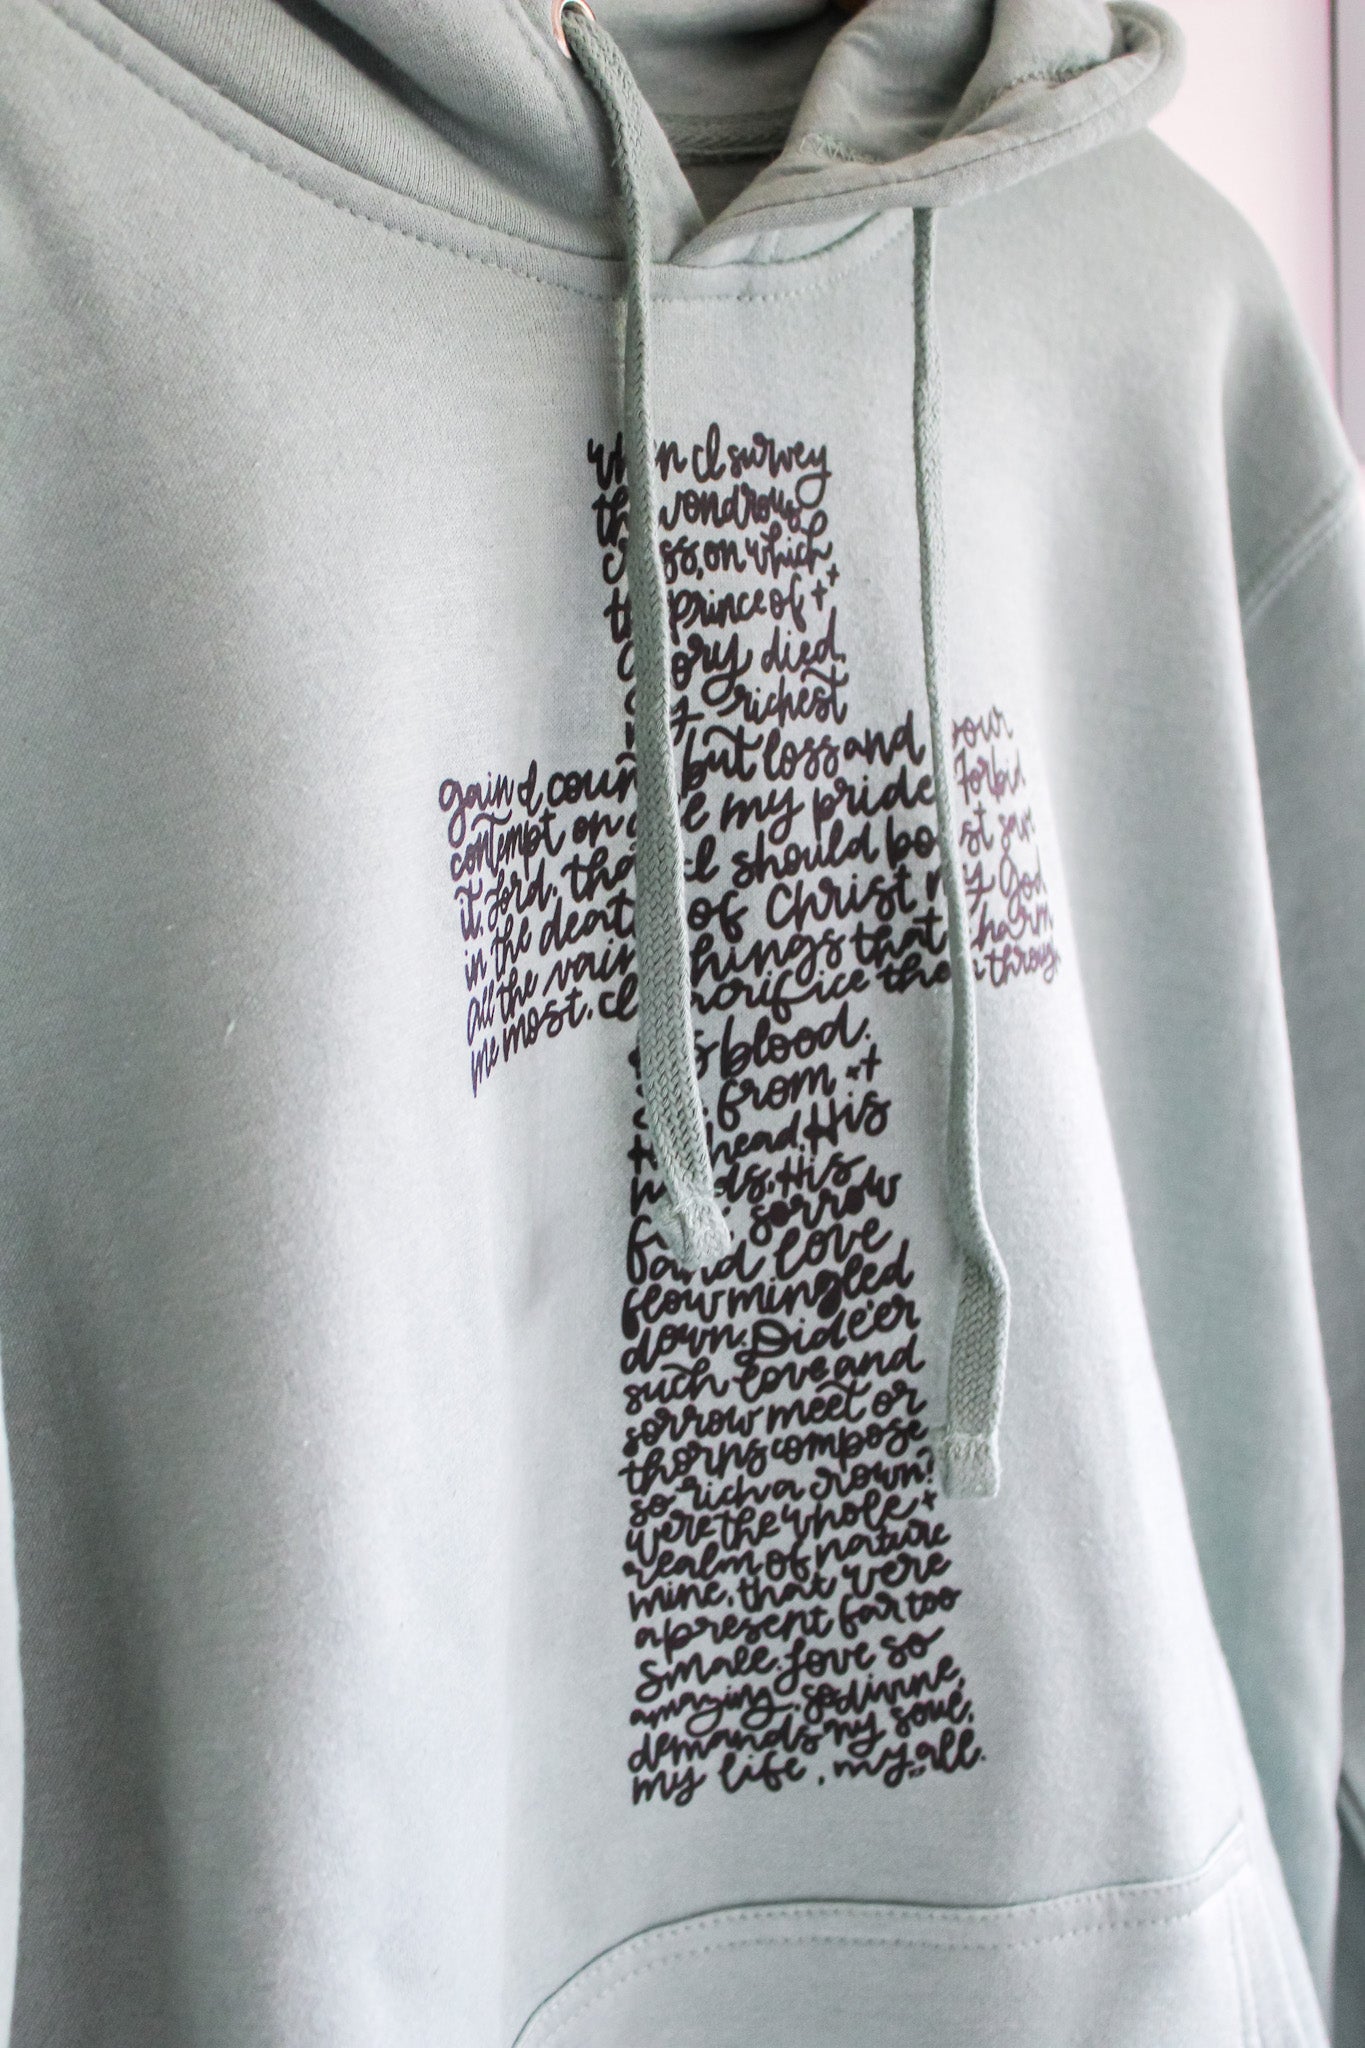 Wondrous Cross Hooded Sweatshirt (Color: Heather Sage)